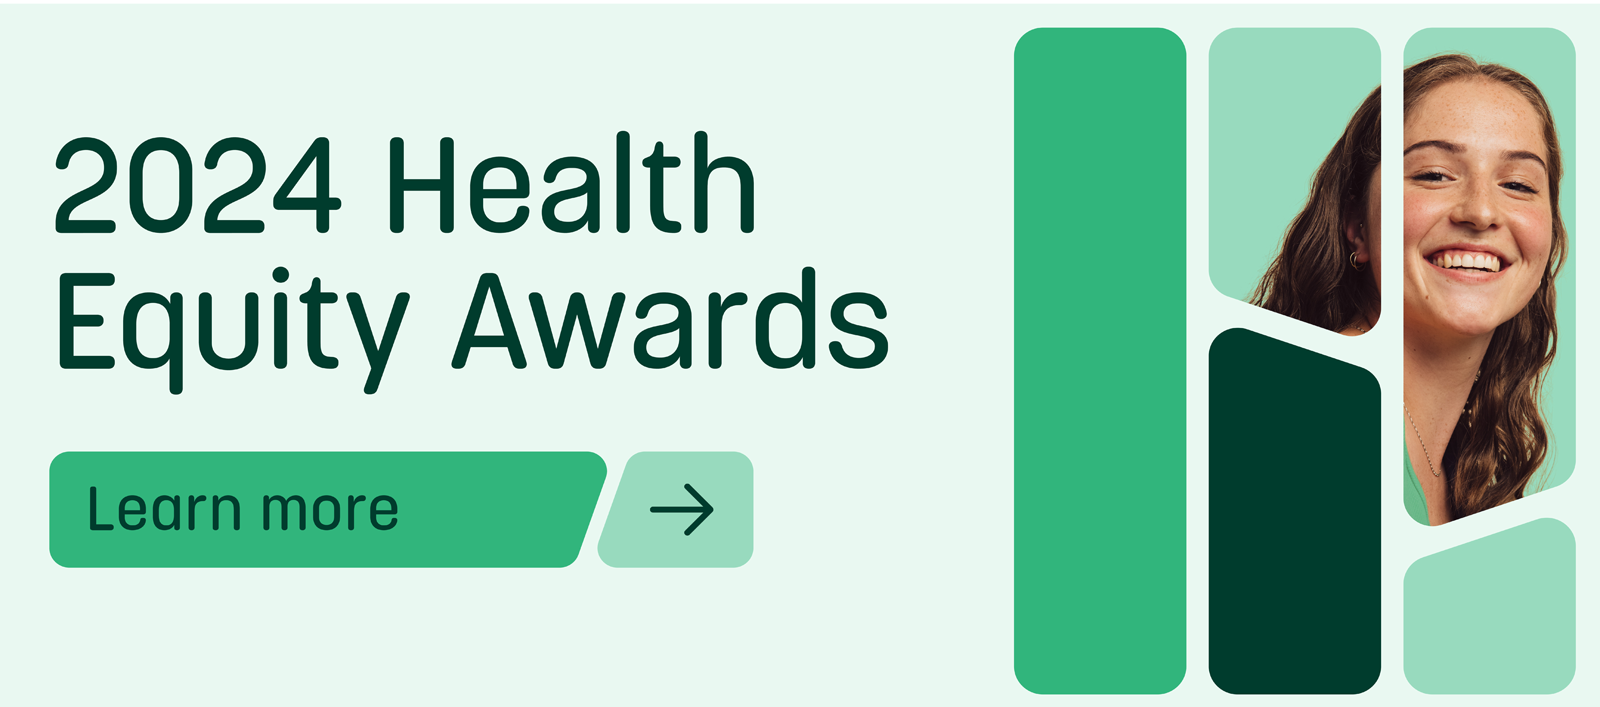 Health Equity Awards 2024 